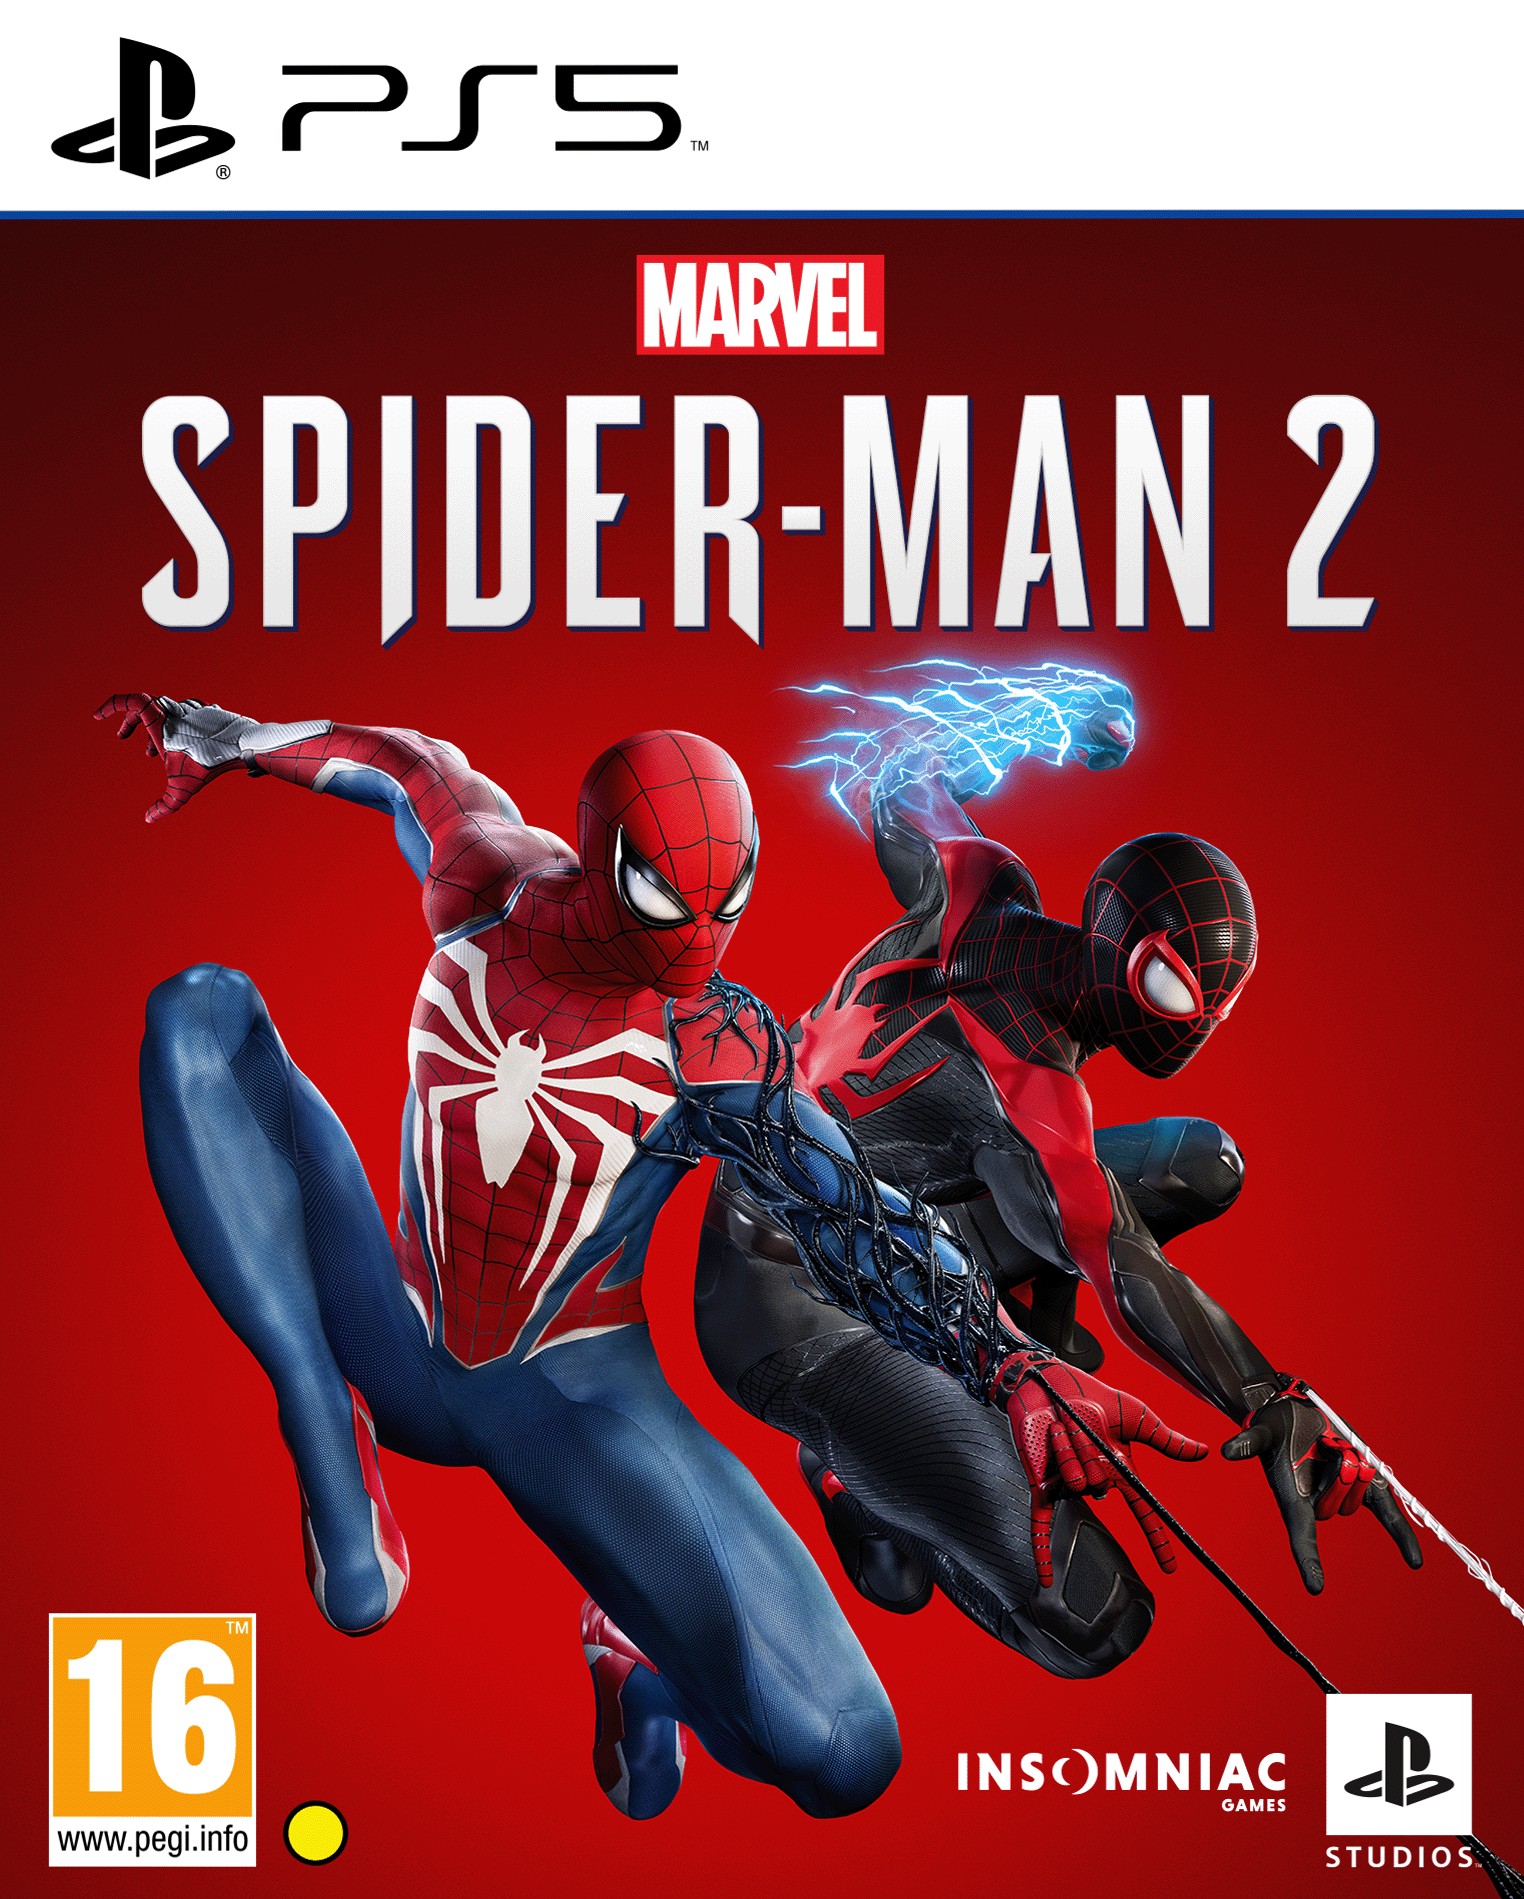 Marvel’s Spider-Man 2 + Preorder Bonus